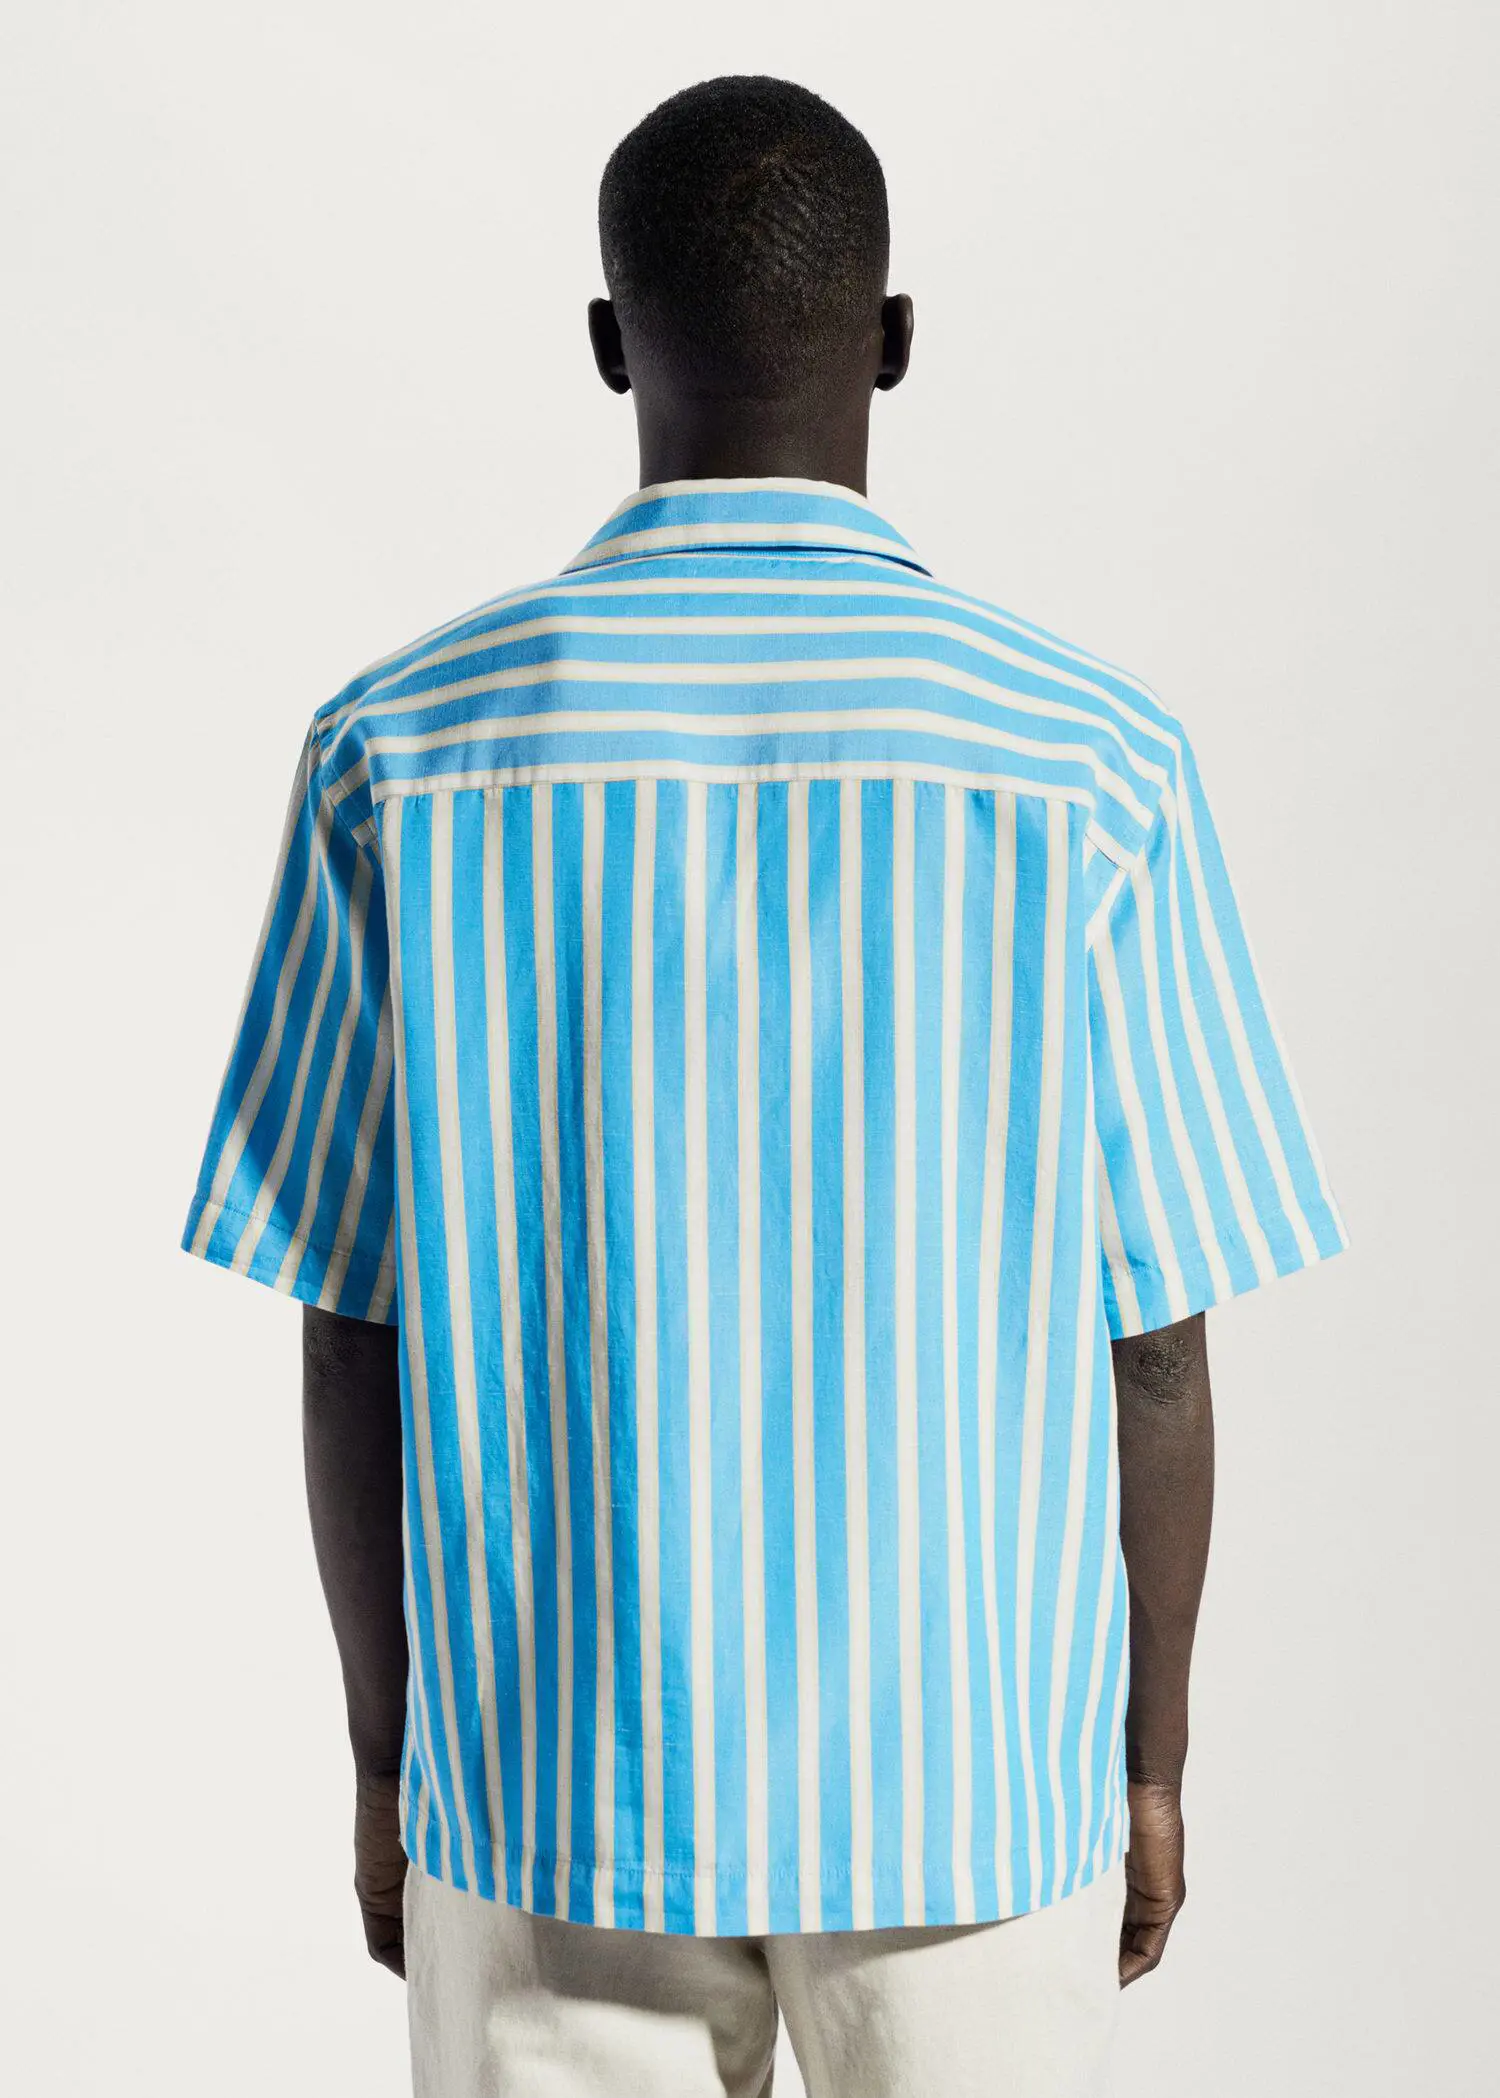 Mango Striped cotton linen shirt. a person wearing a blue and white striped shirt. 